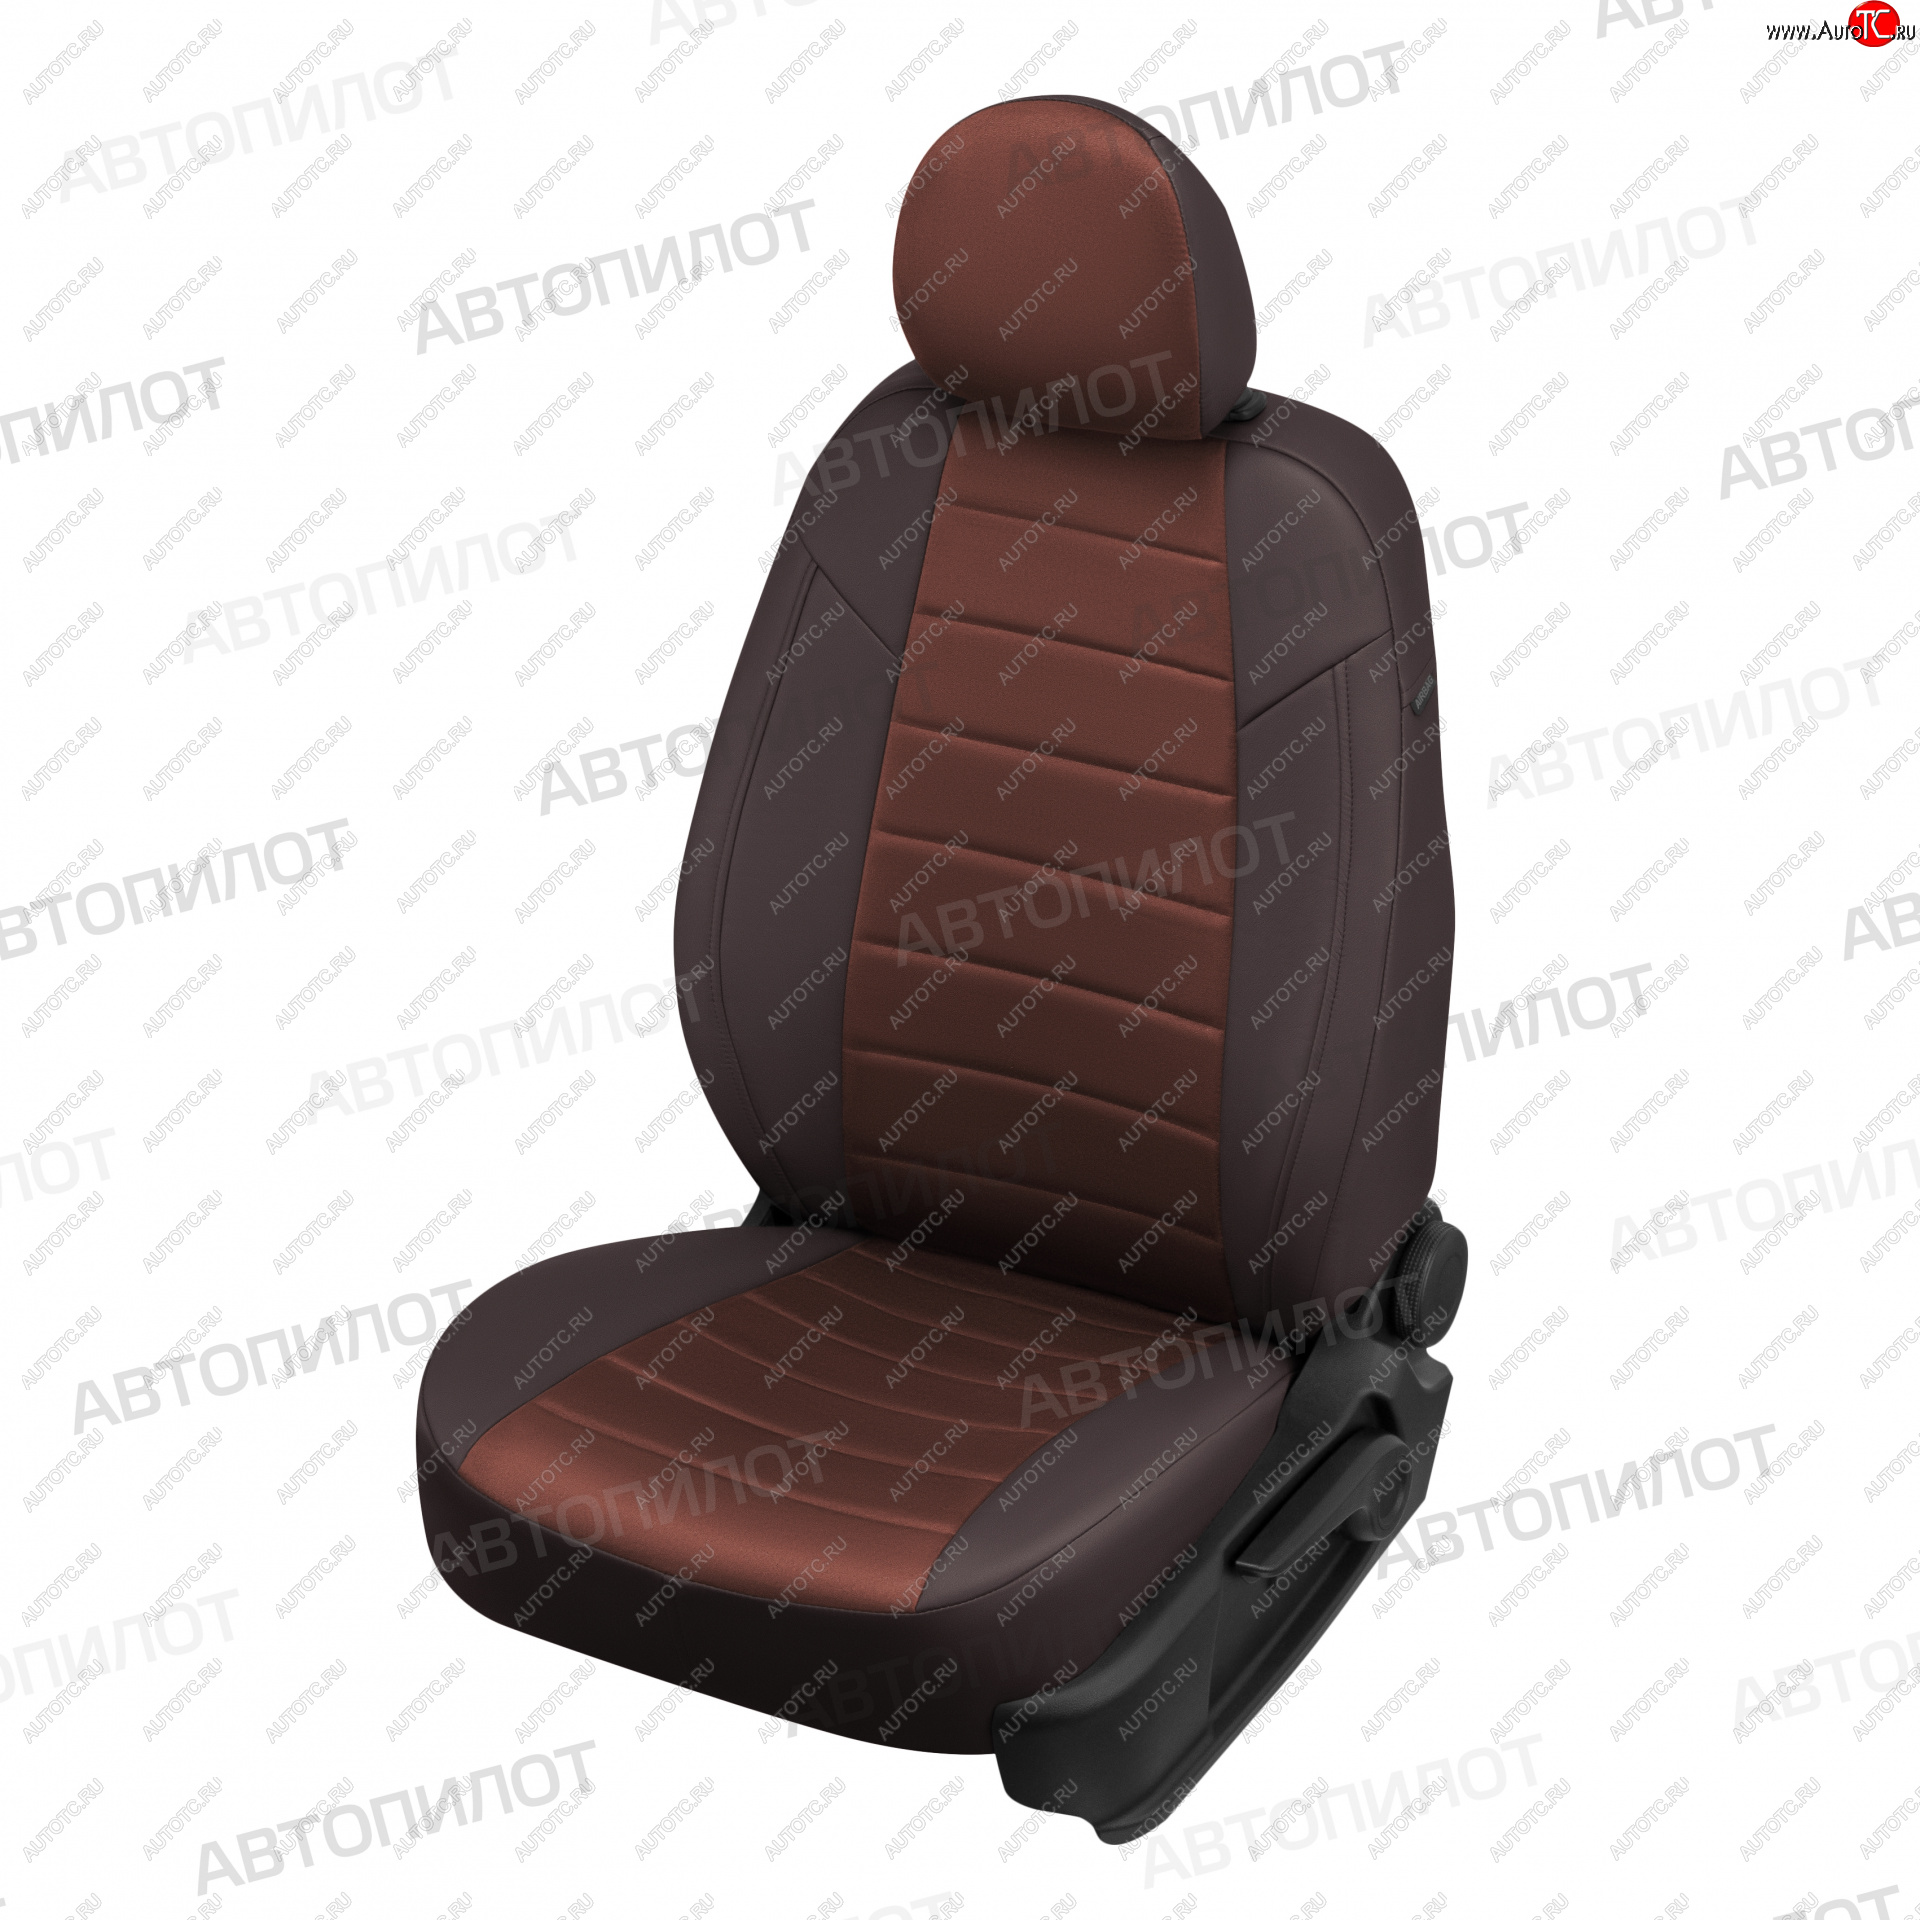 13 449 р. Чехлы сидений (экокожа/алькантара) Автопилот  Hyundai Tucson  3 TL (2015-2021) (шоколад)